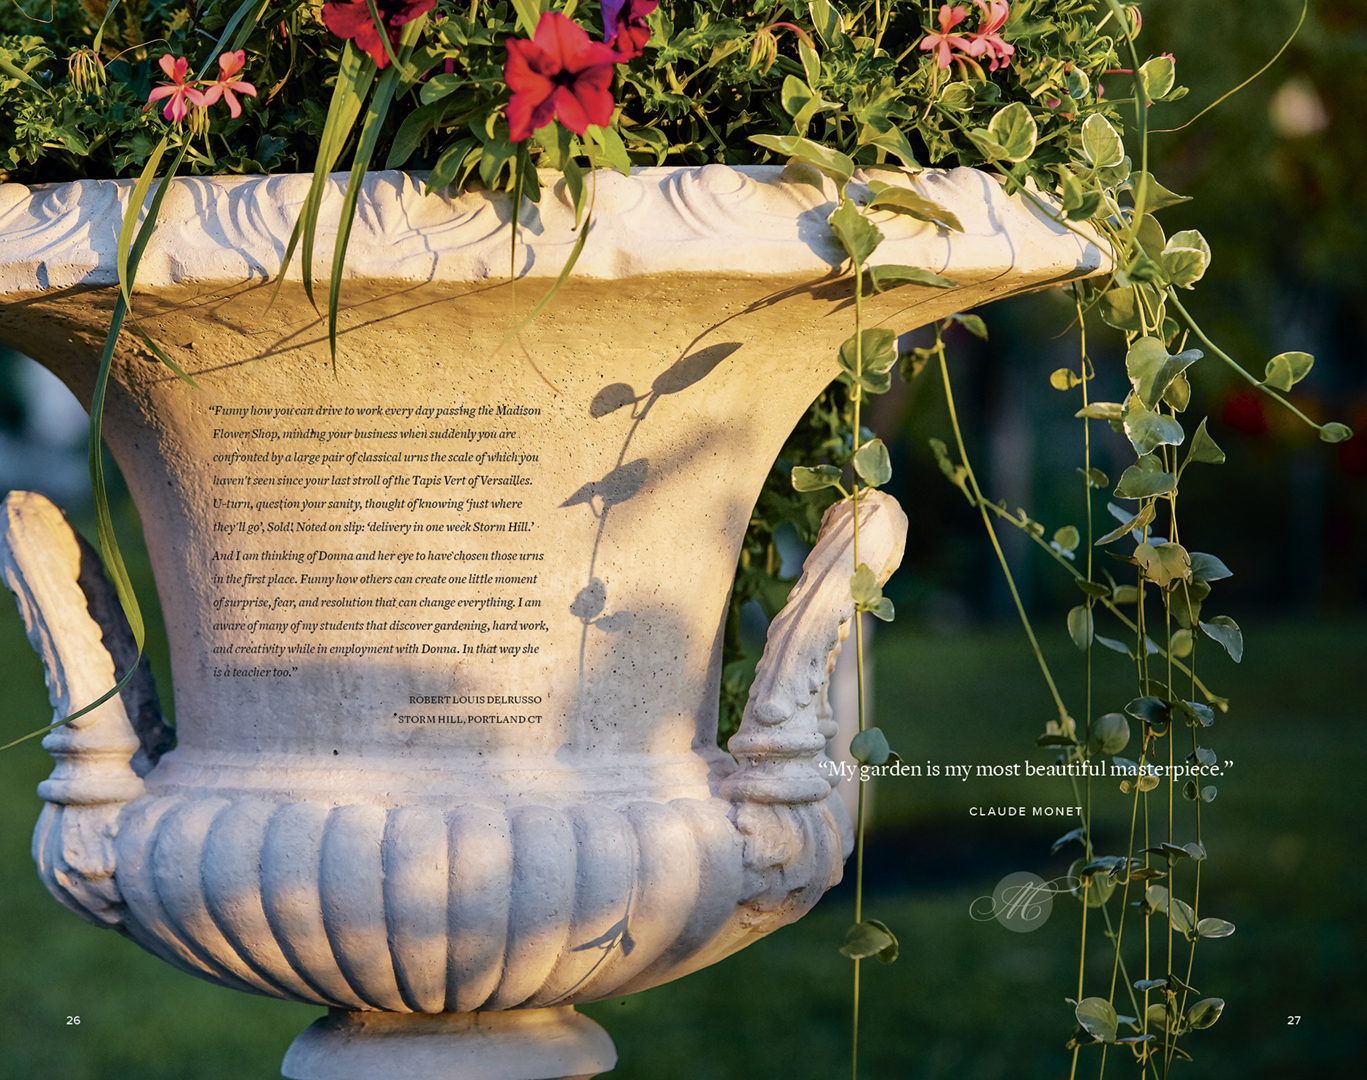 Madison Flower Shop Anniversary Brochure: “My garden is my most beautiful masterpiece.” Claude Monet